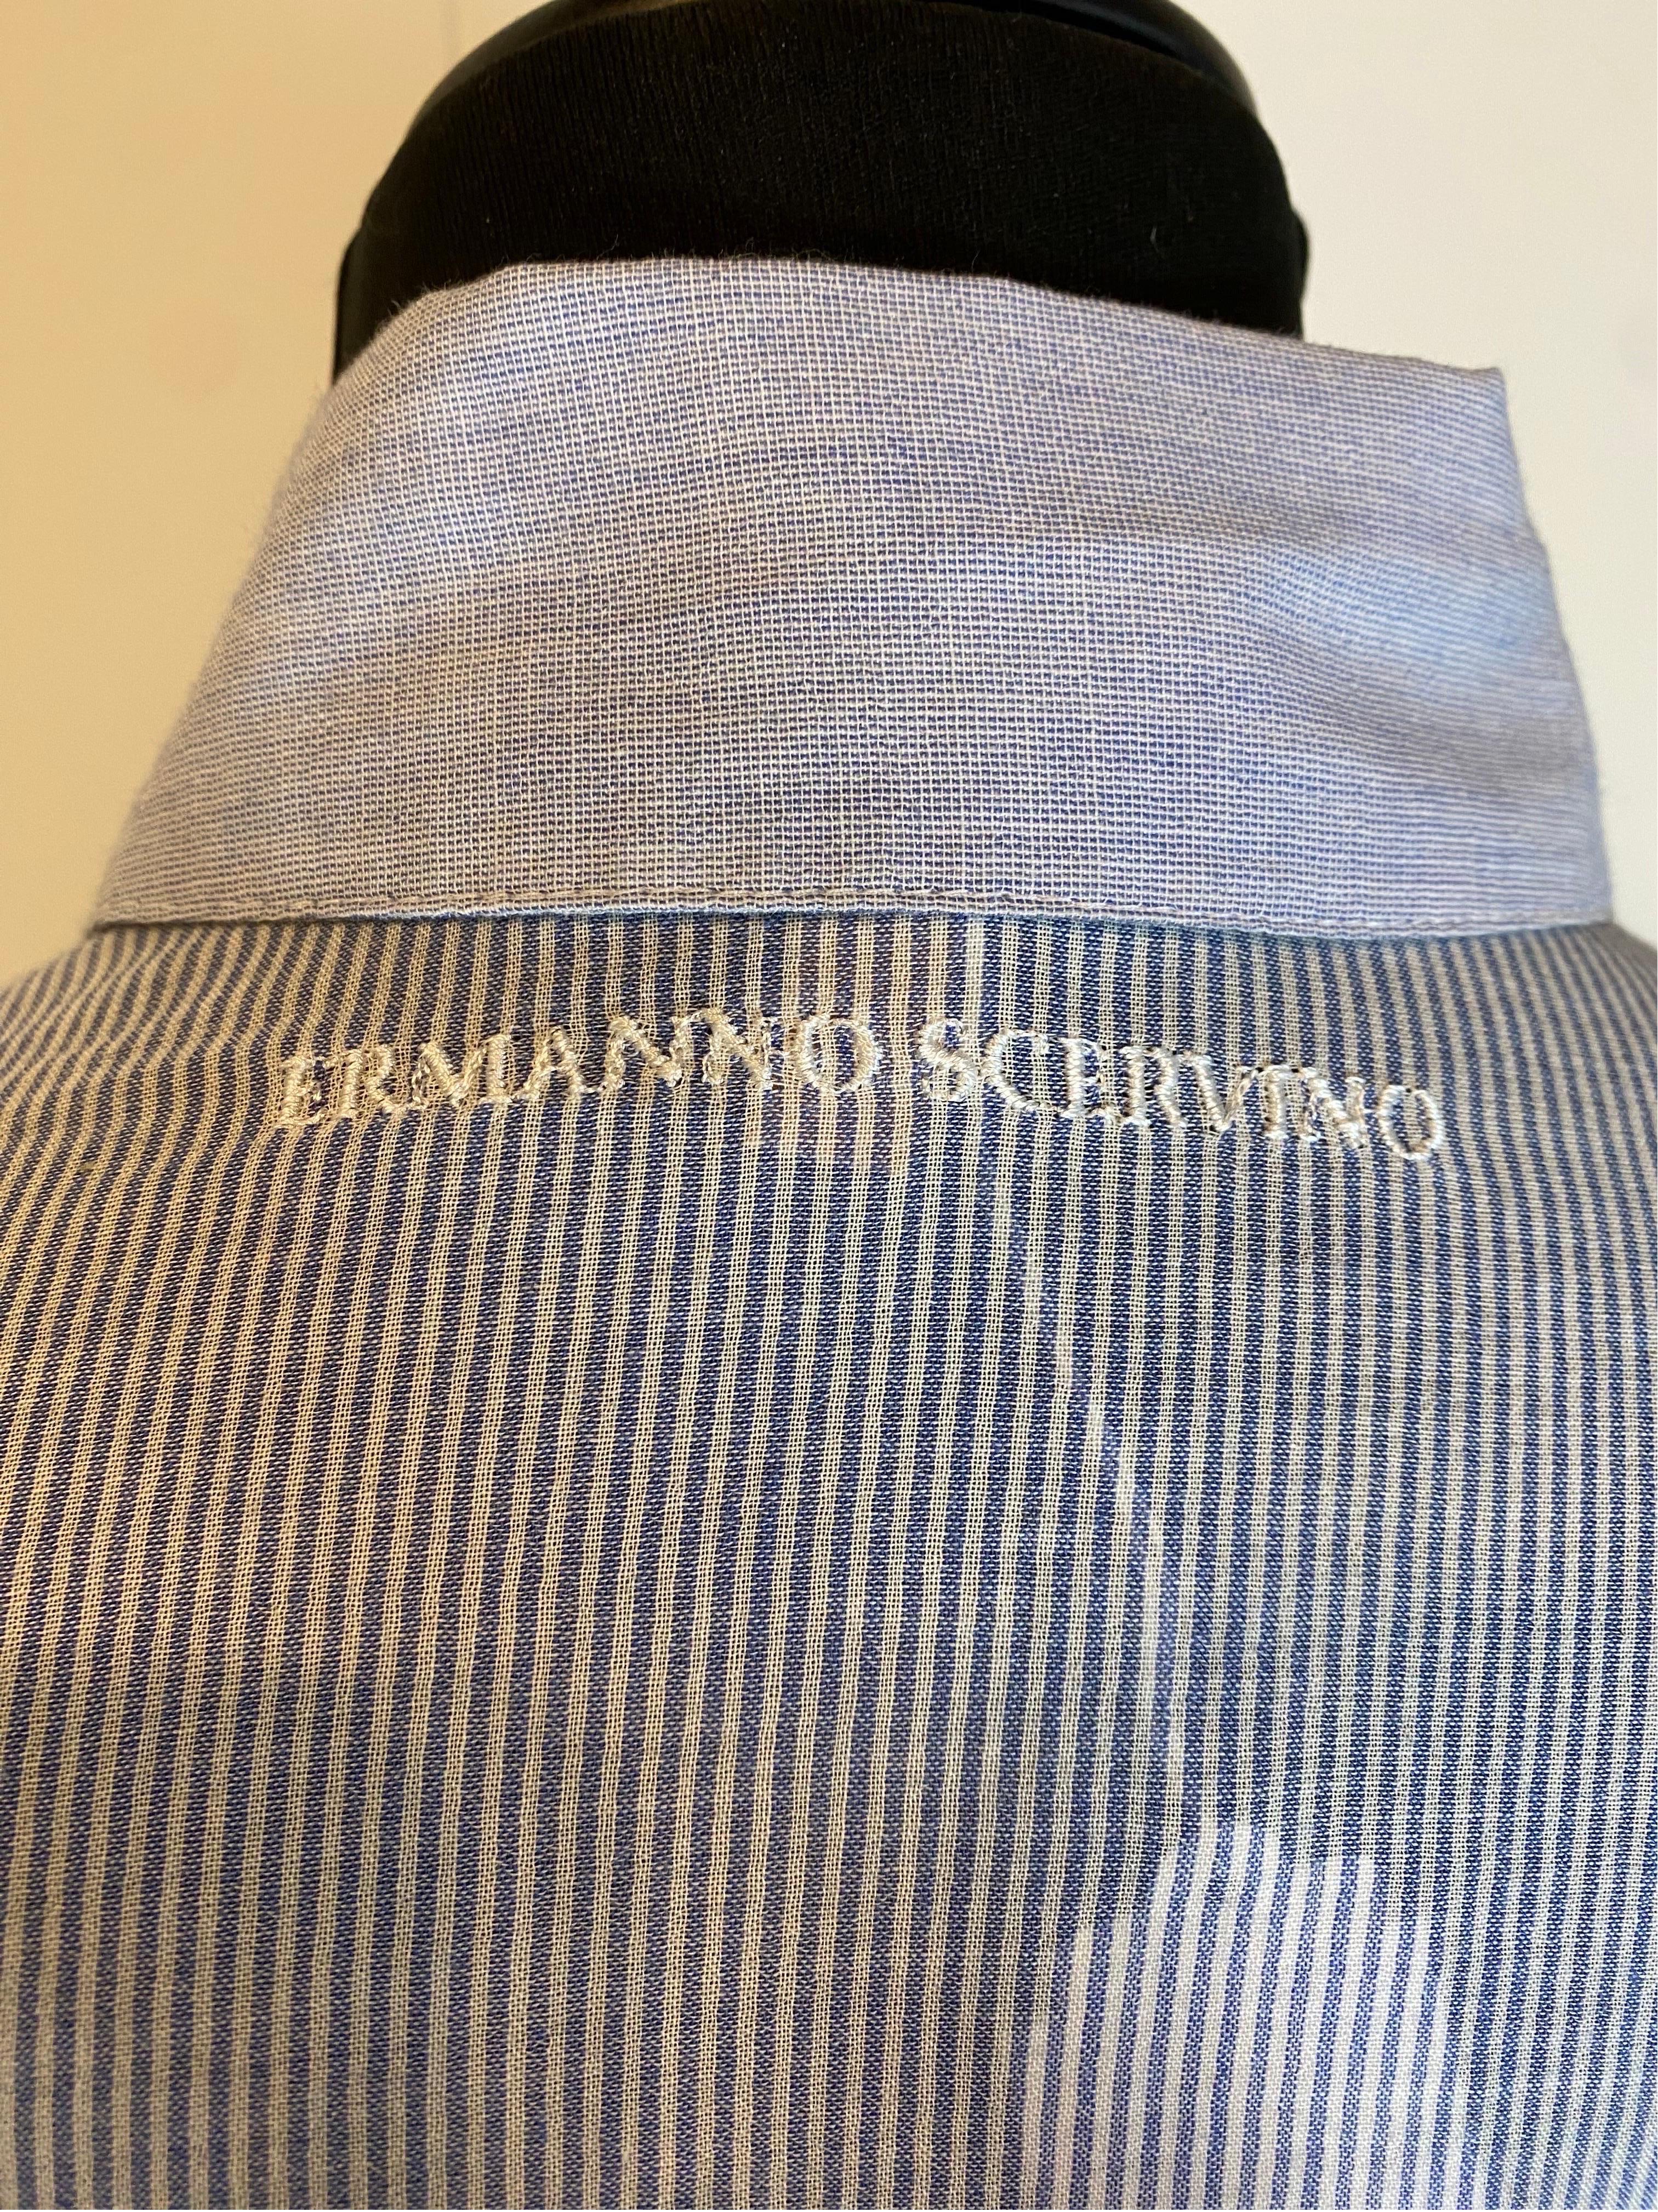 Ermanno Scervino light blue stripes Beachwear Shirt For Sale 2